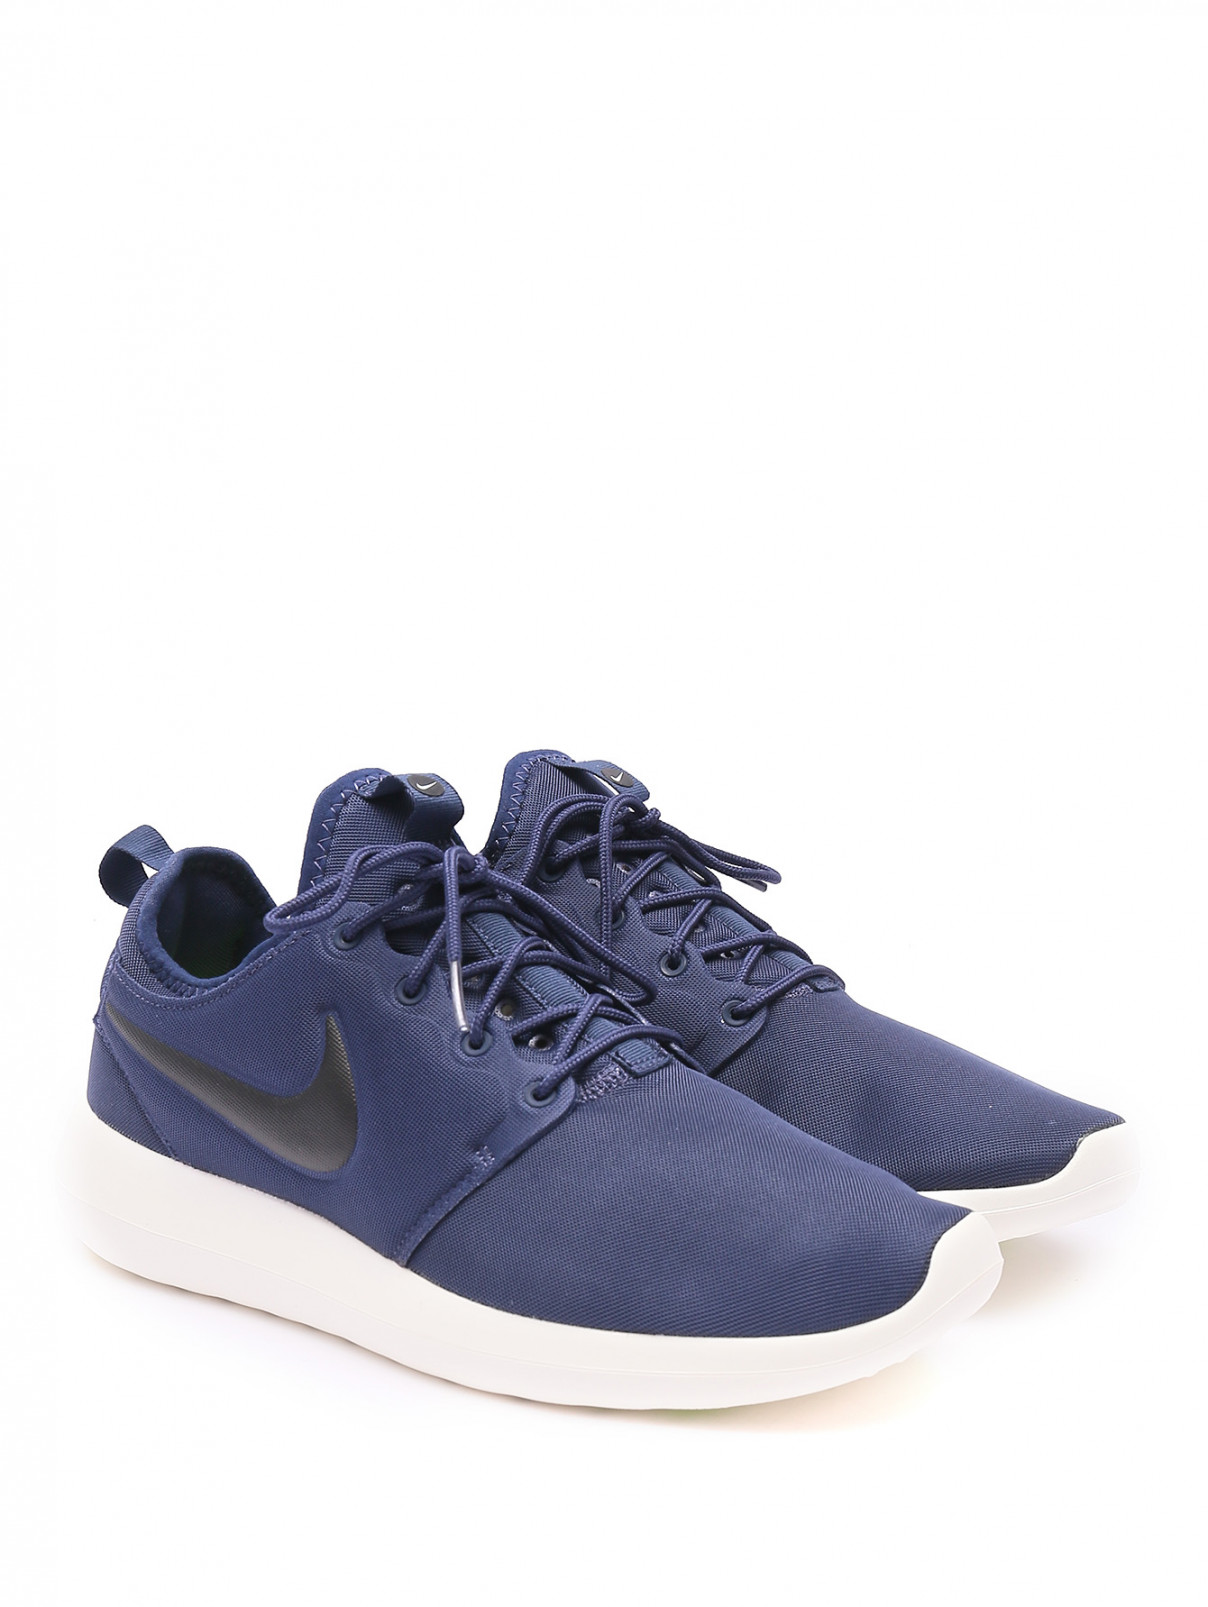 Кроссовки из текстиля на контрастной подошве Nike  –  Общий вид  – Цвет:  Синий